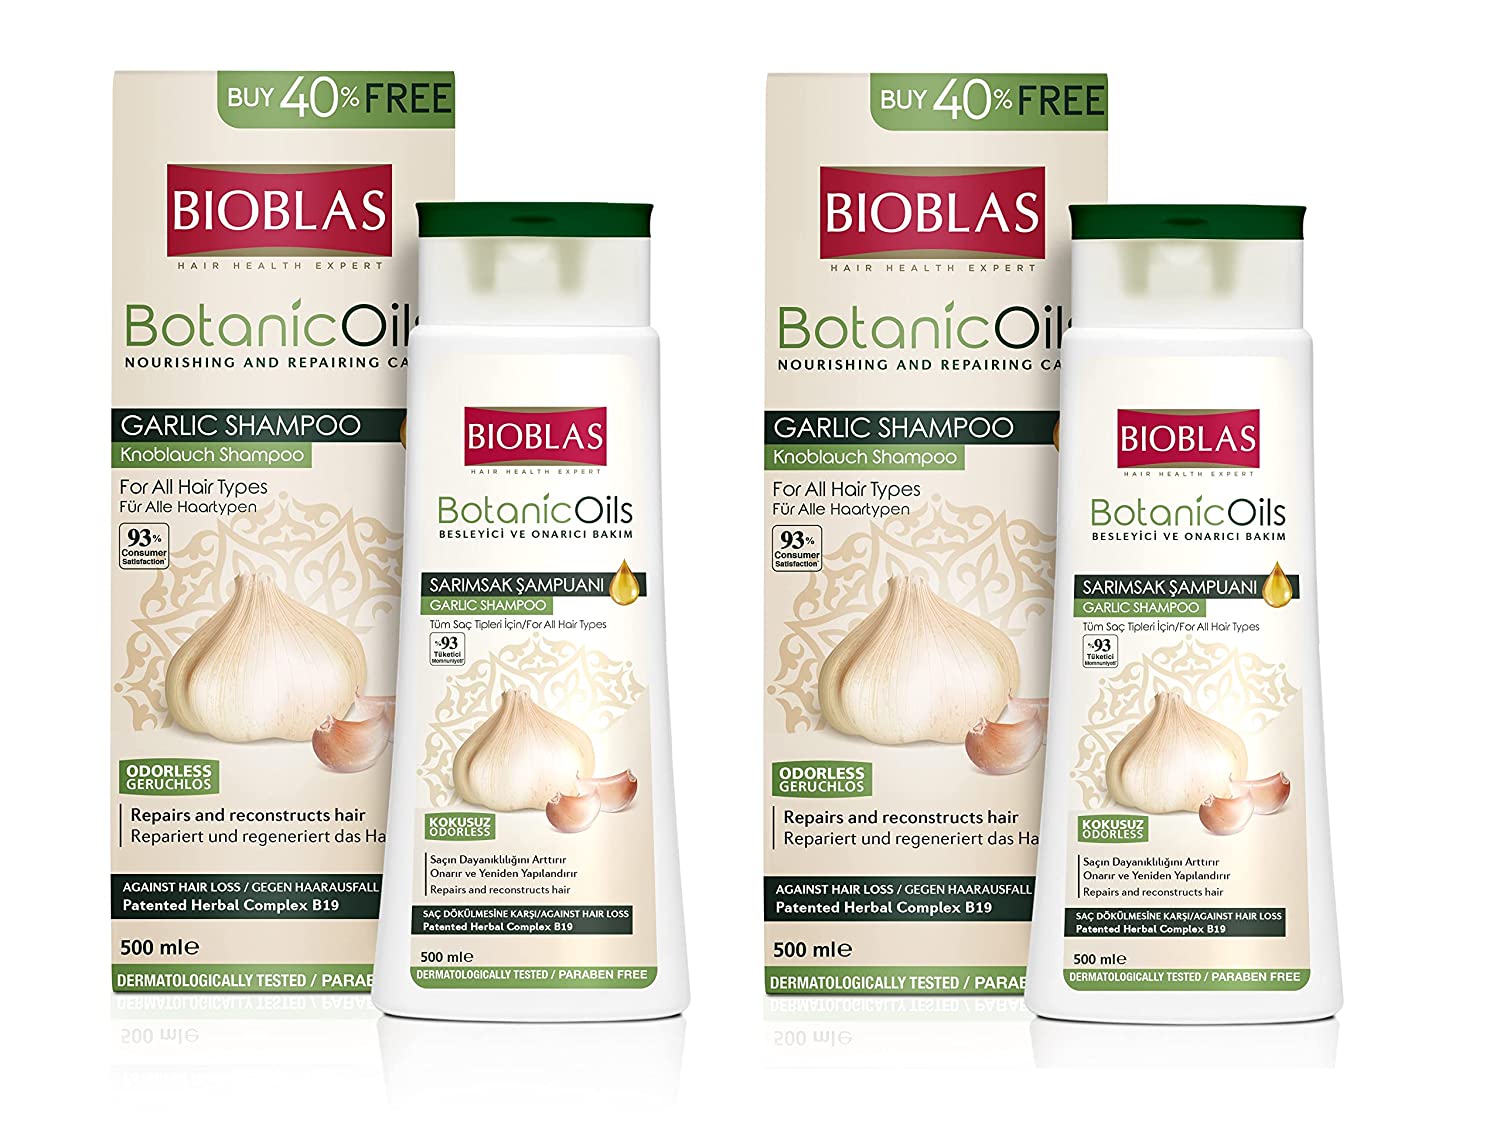 BIOBLAS 2 x Garlic Shampoo 500 ml Bioblad, Odourless, Anti Hair Loss for Women and Men